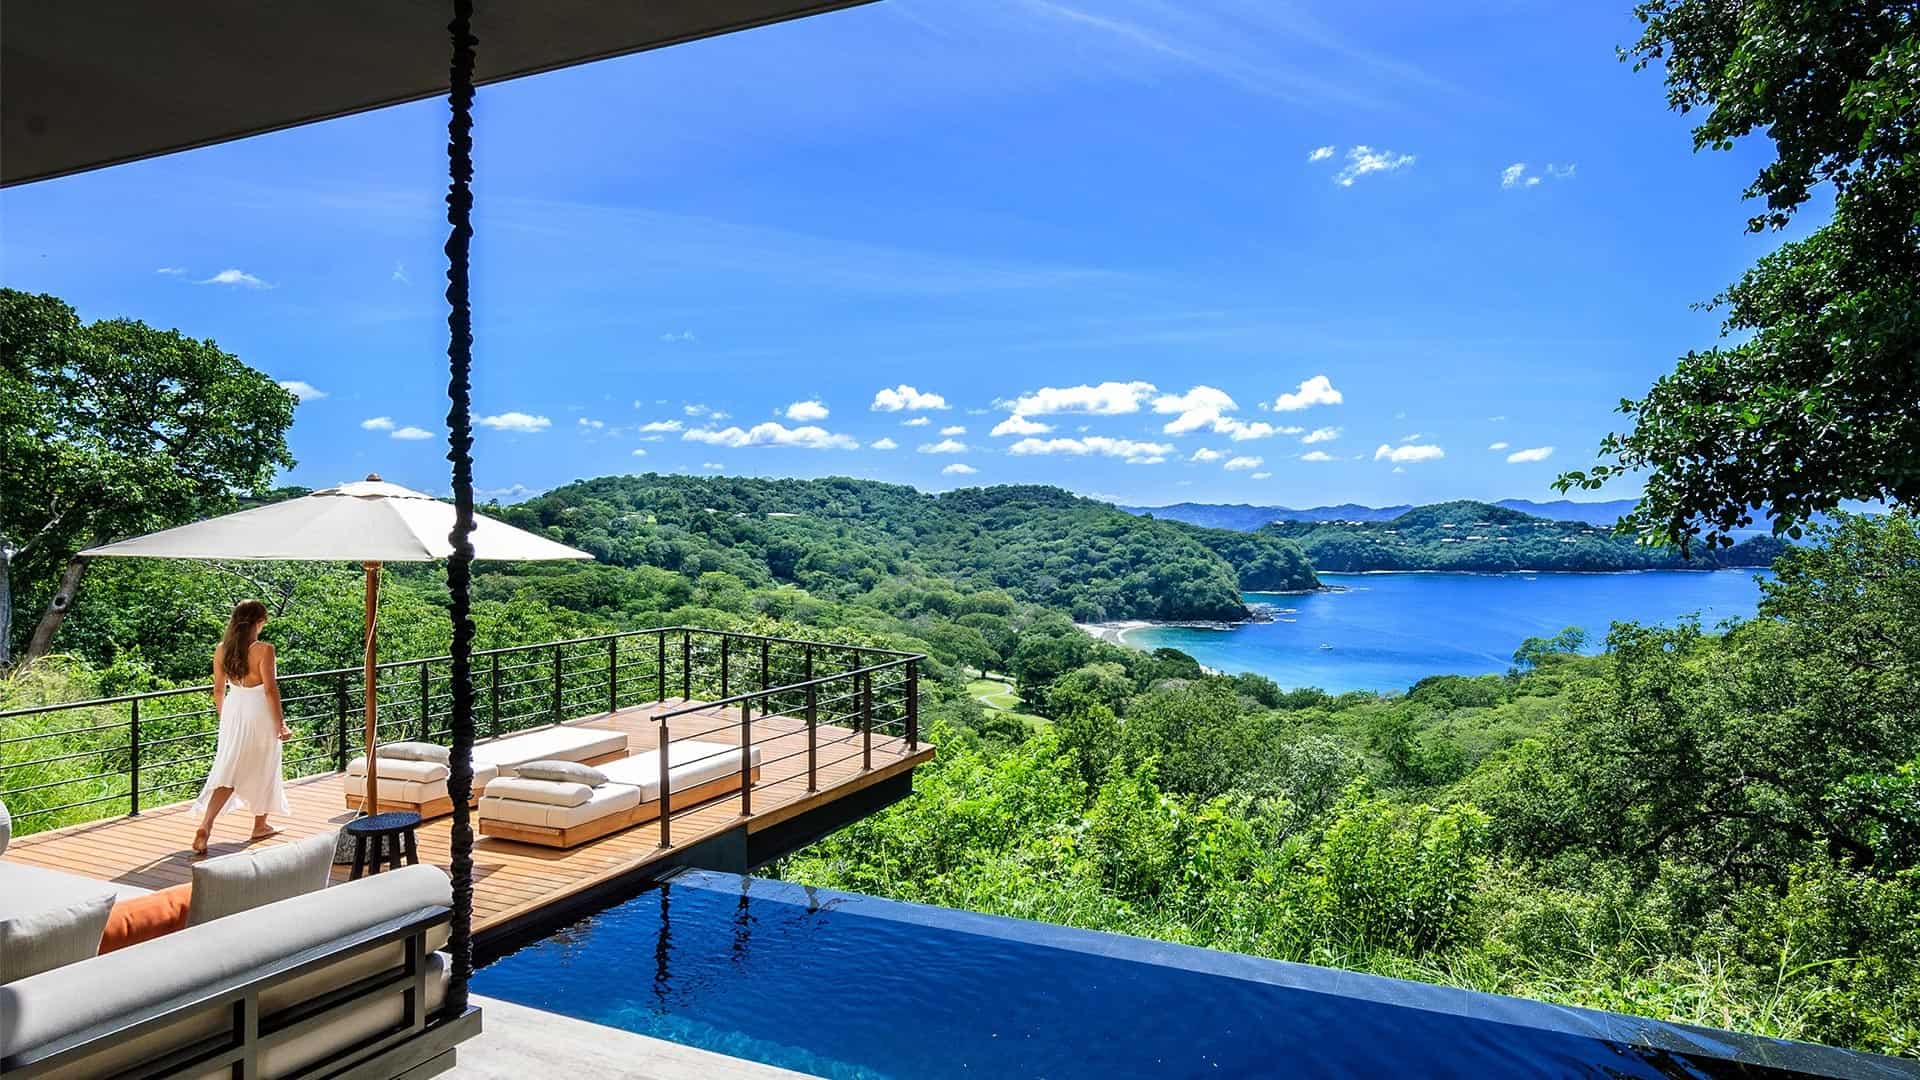 Luxury travel in Costa Rica